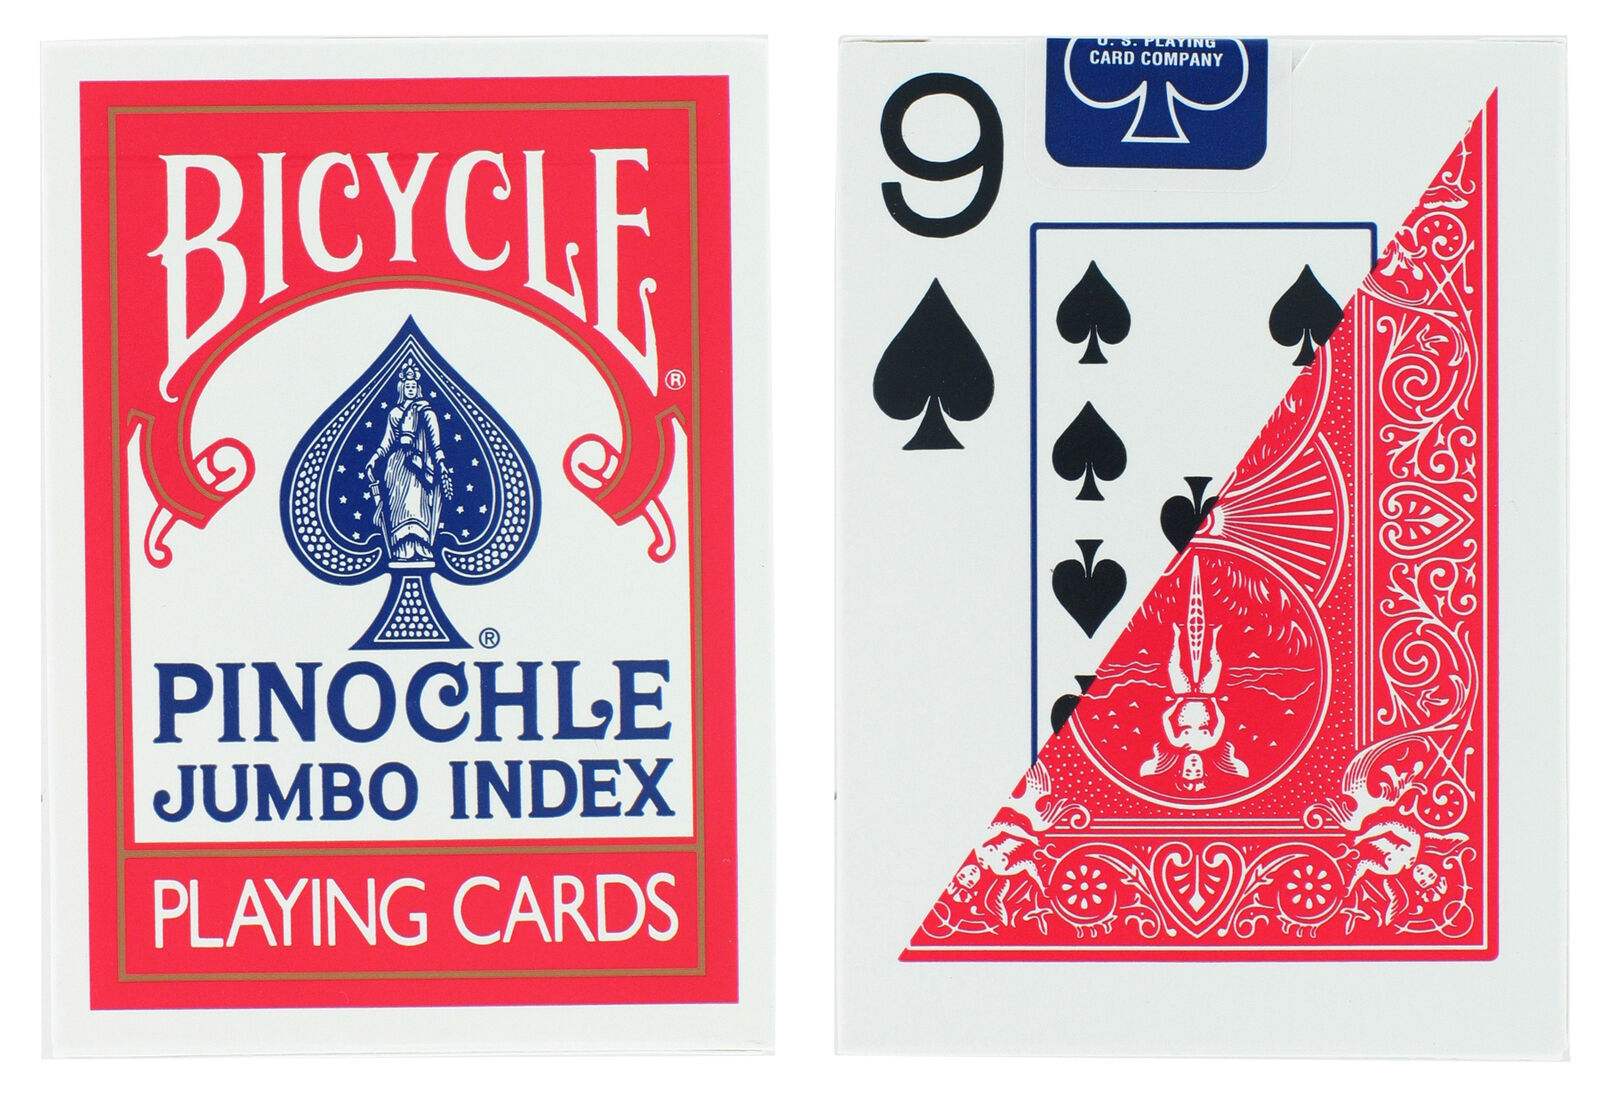 Bicycle Pinochle Playing Cards Jumbo Index 2 Decks SG/_B01MA1FDUC/_US